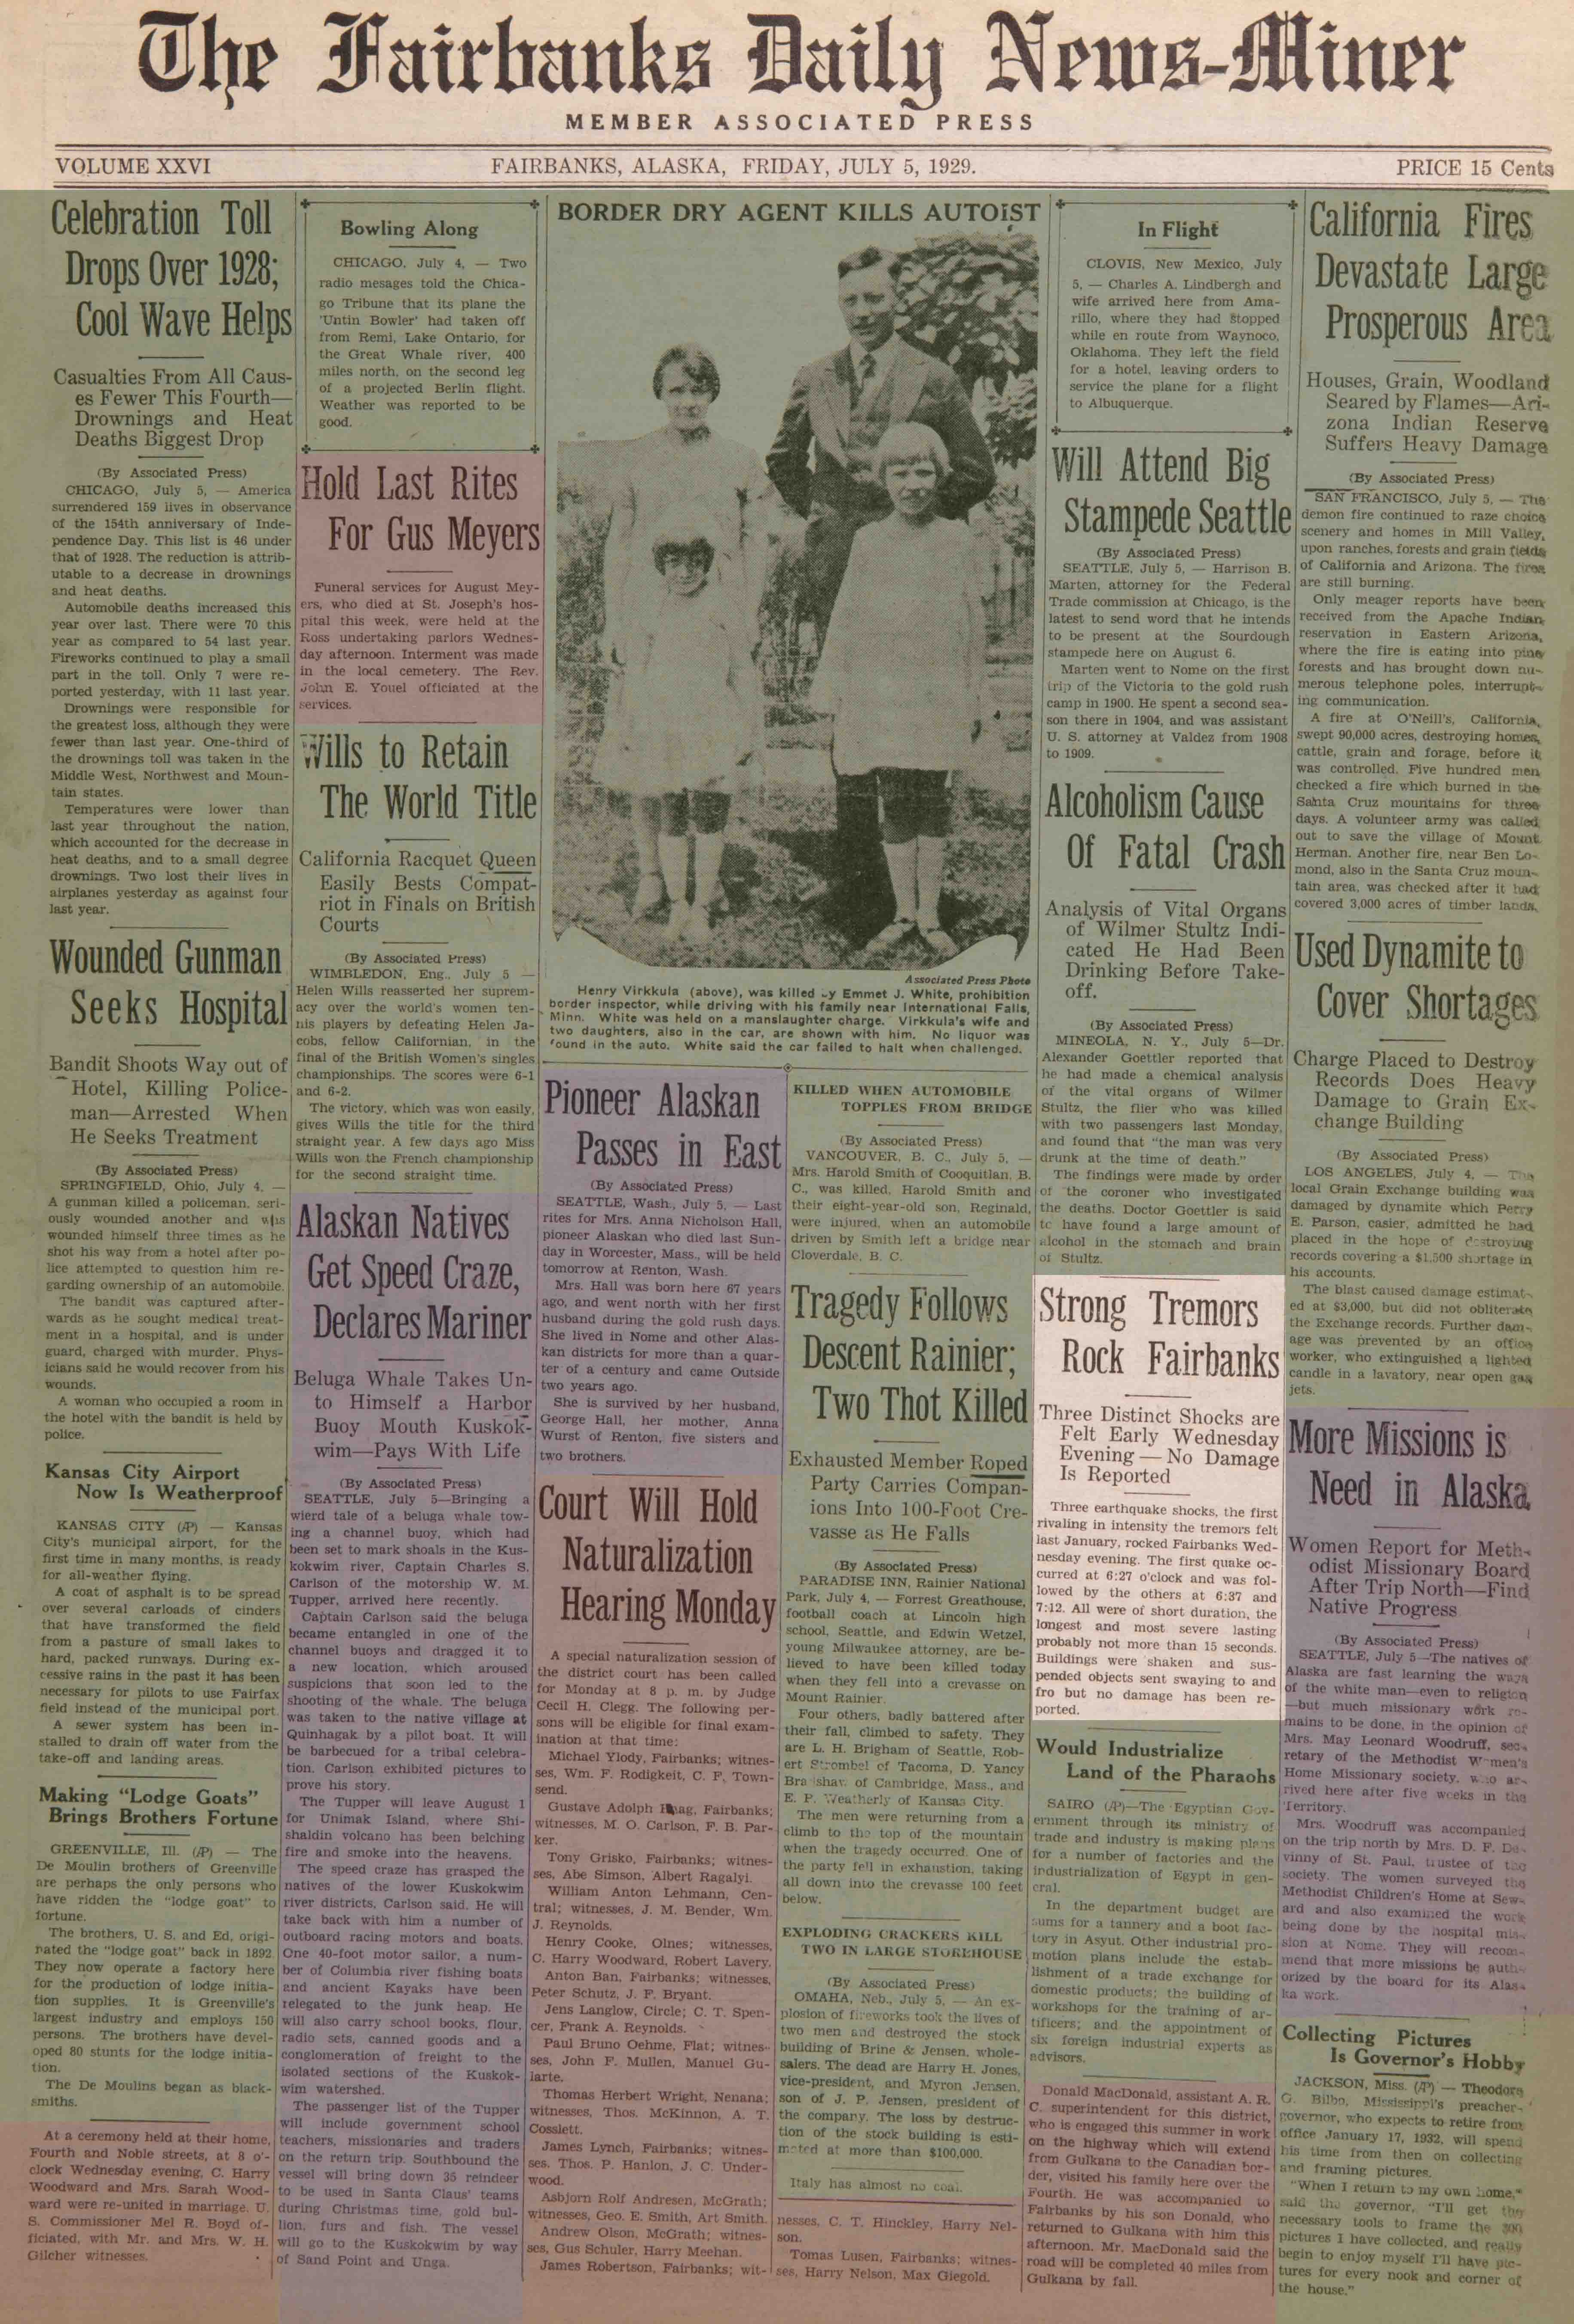 1929 July 5, Fairbanks Daily News-Miner (pg 1)